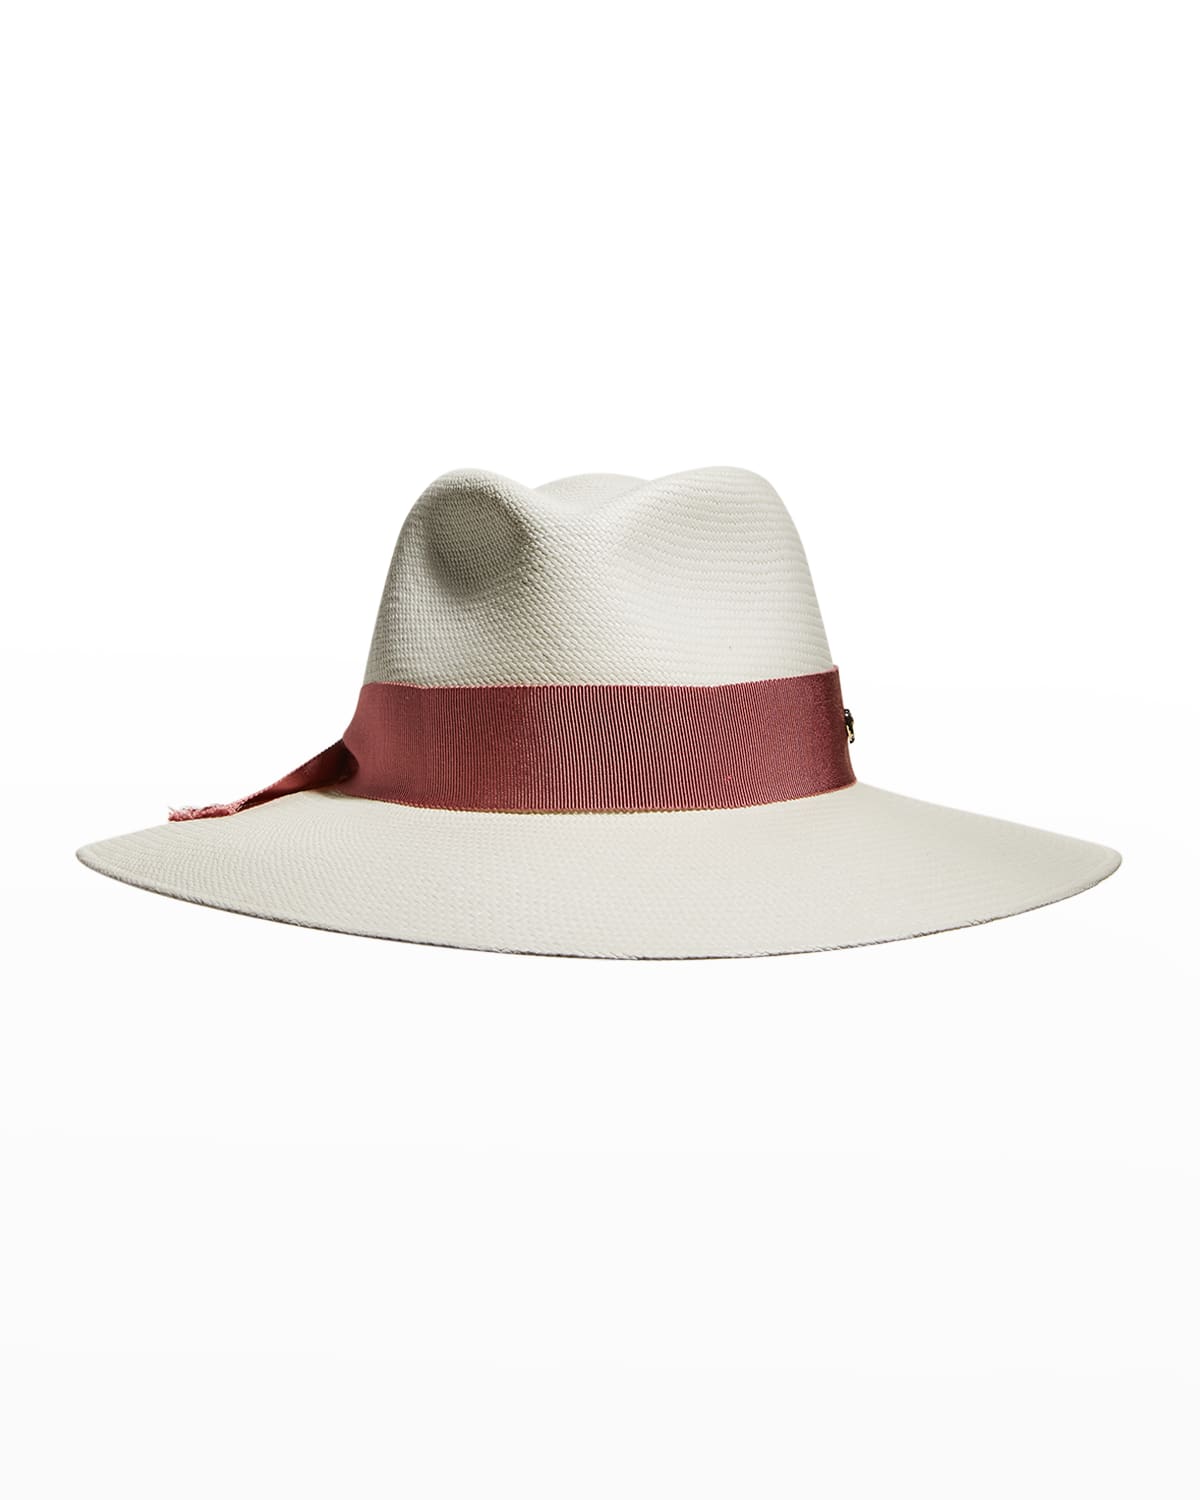 Womens Fashion Fedora Hat with Trim Band & Adjustable String